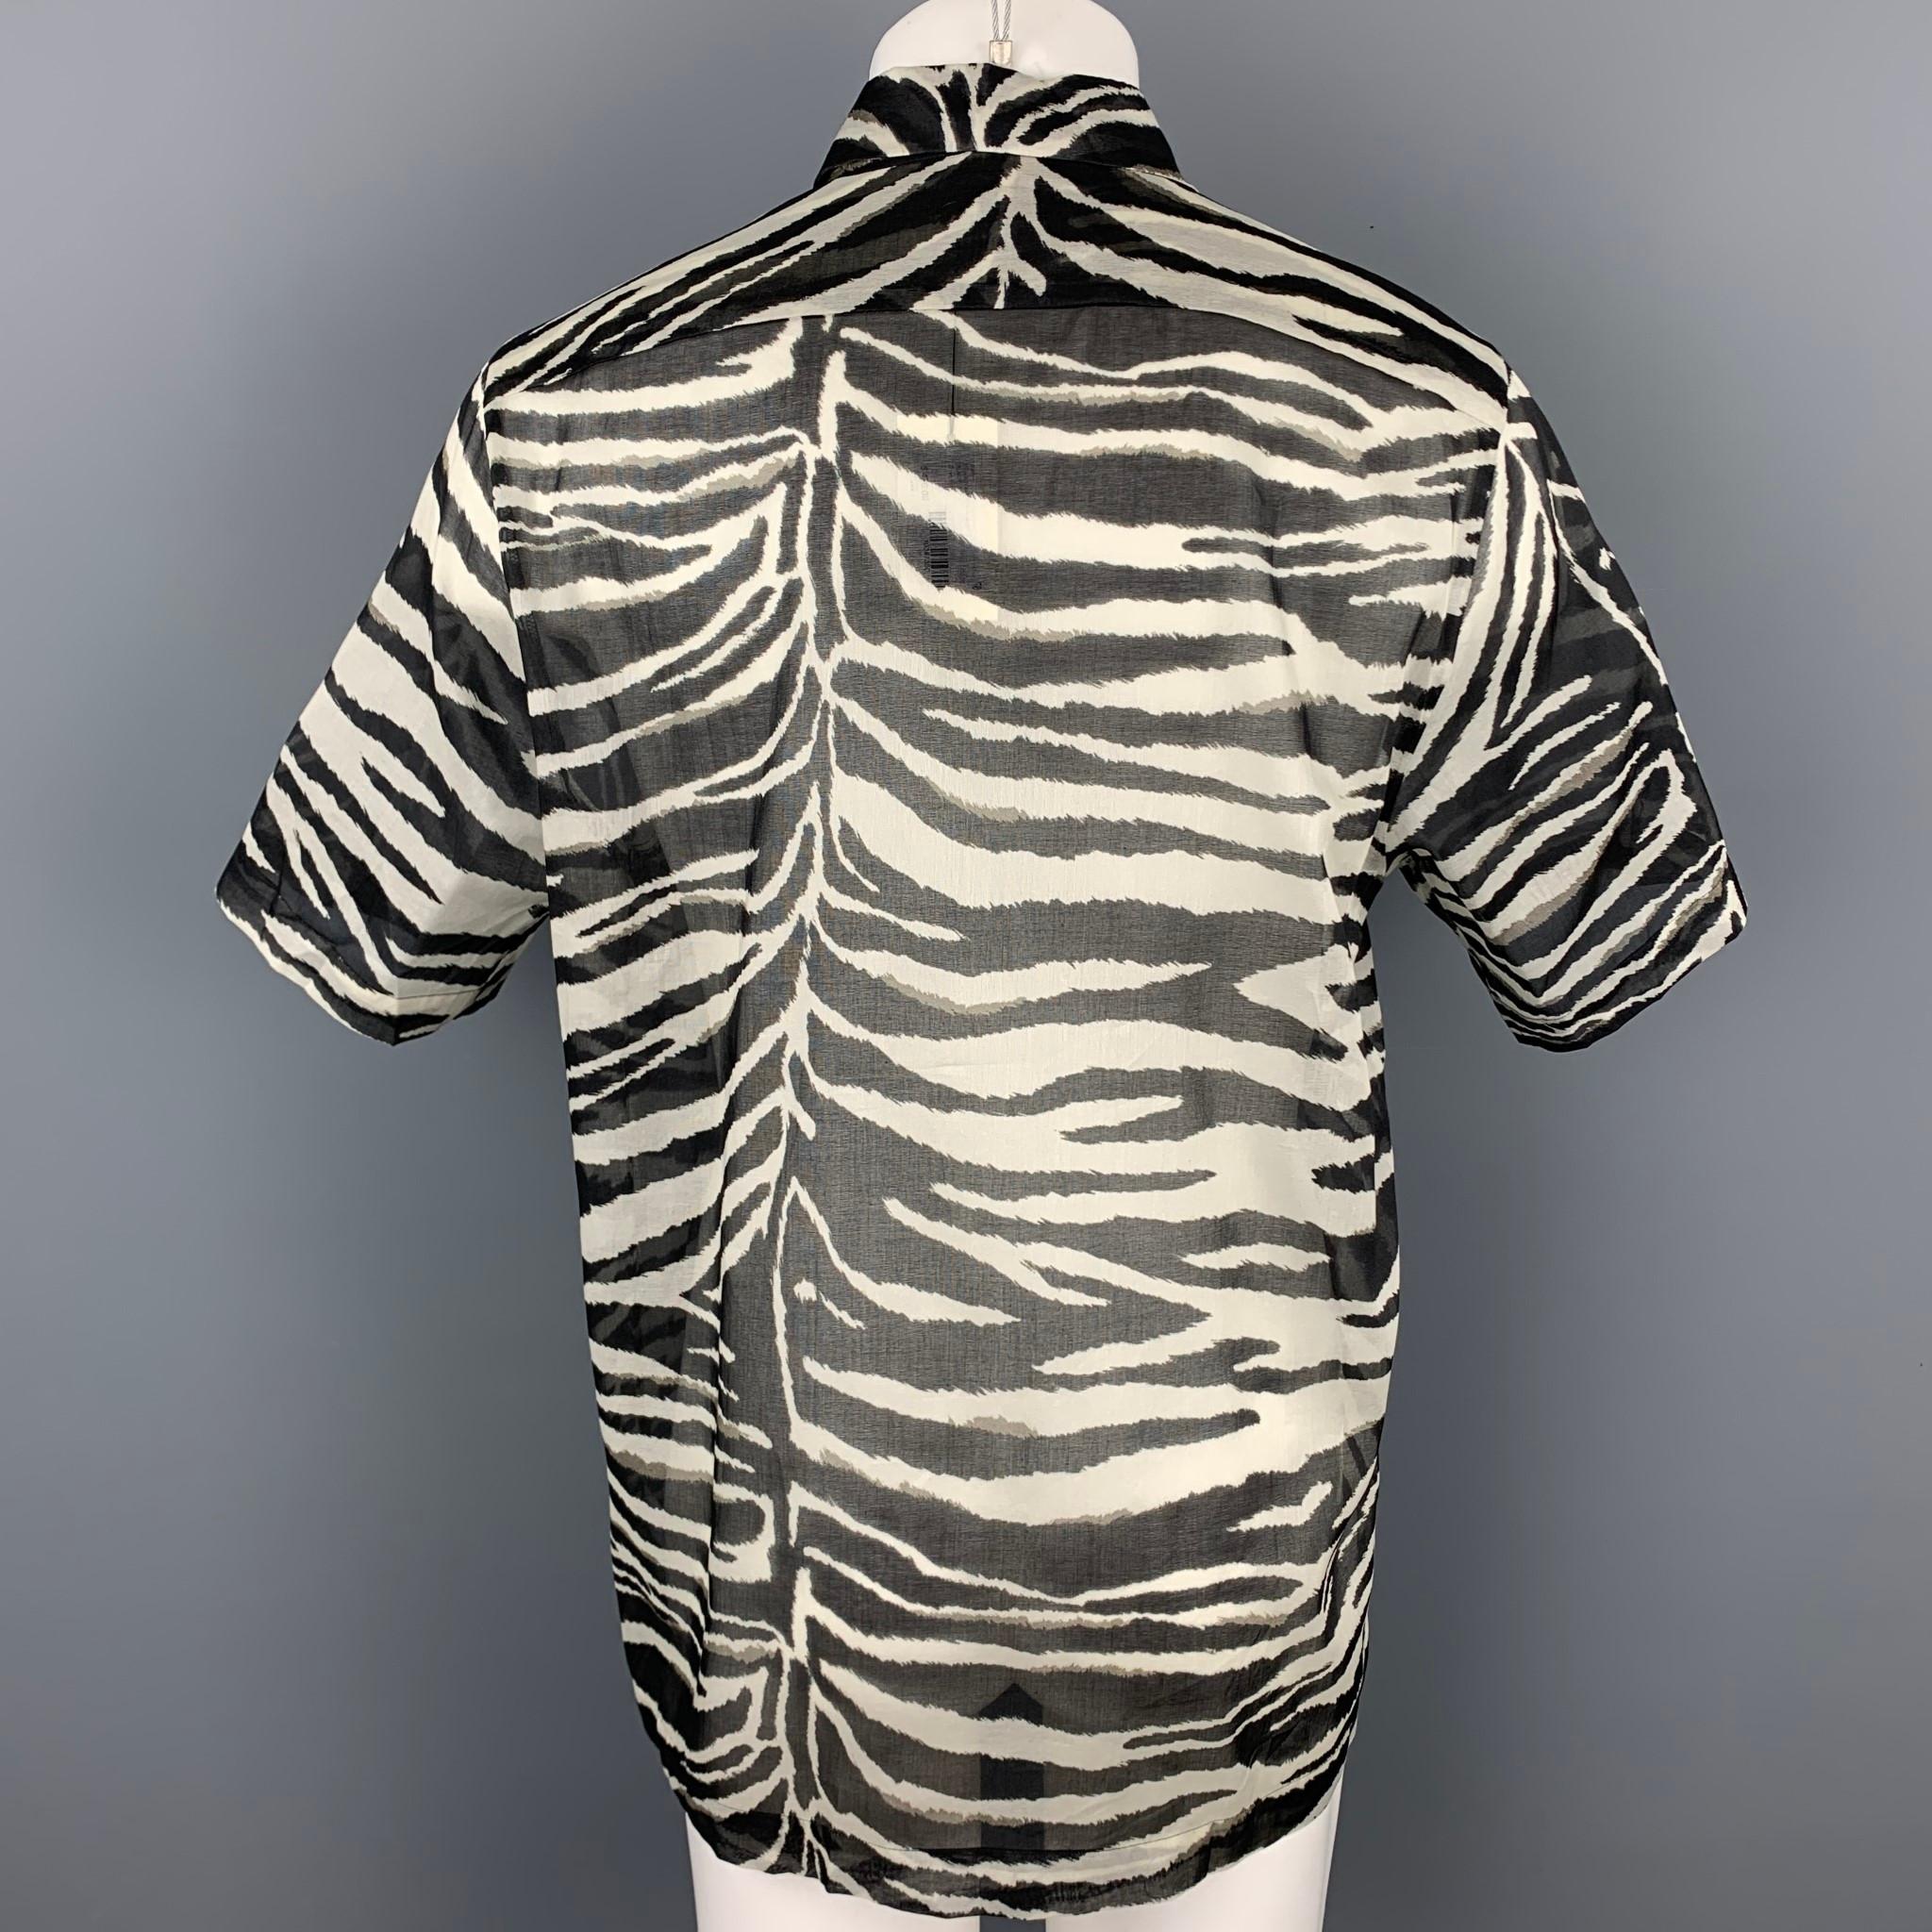 Men's DRIES VAN NOTEN S/S 20 Size XXS Black & White Zebra Print Cotton Camp Shirt